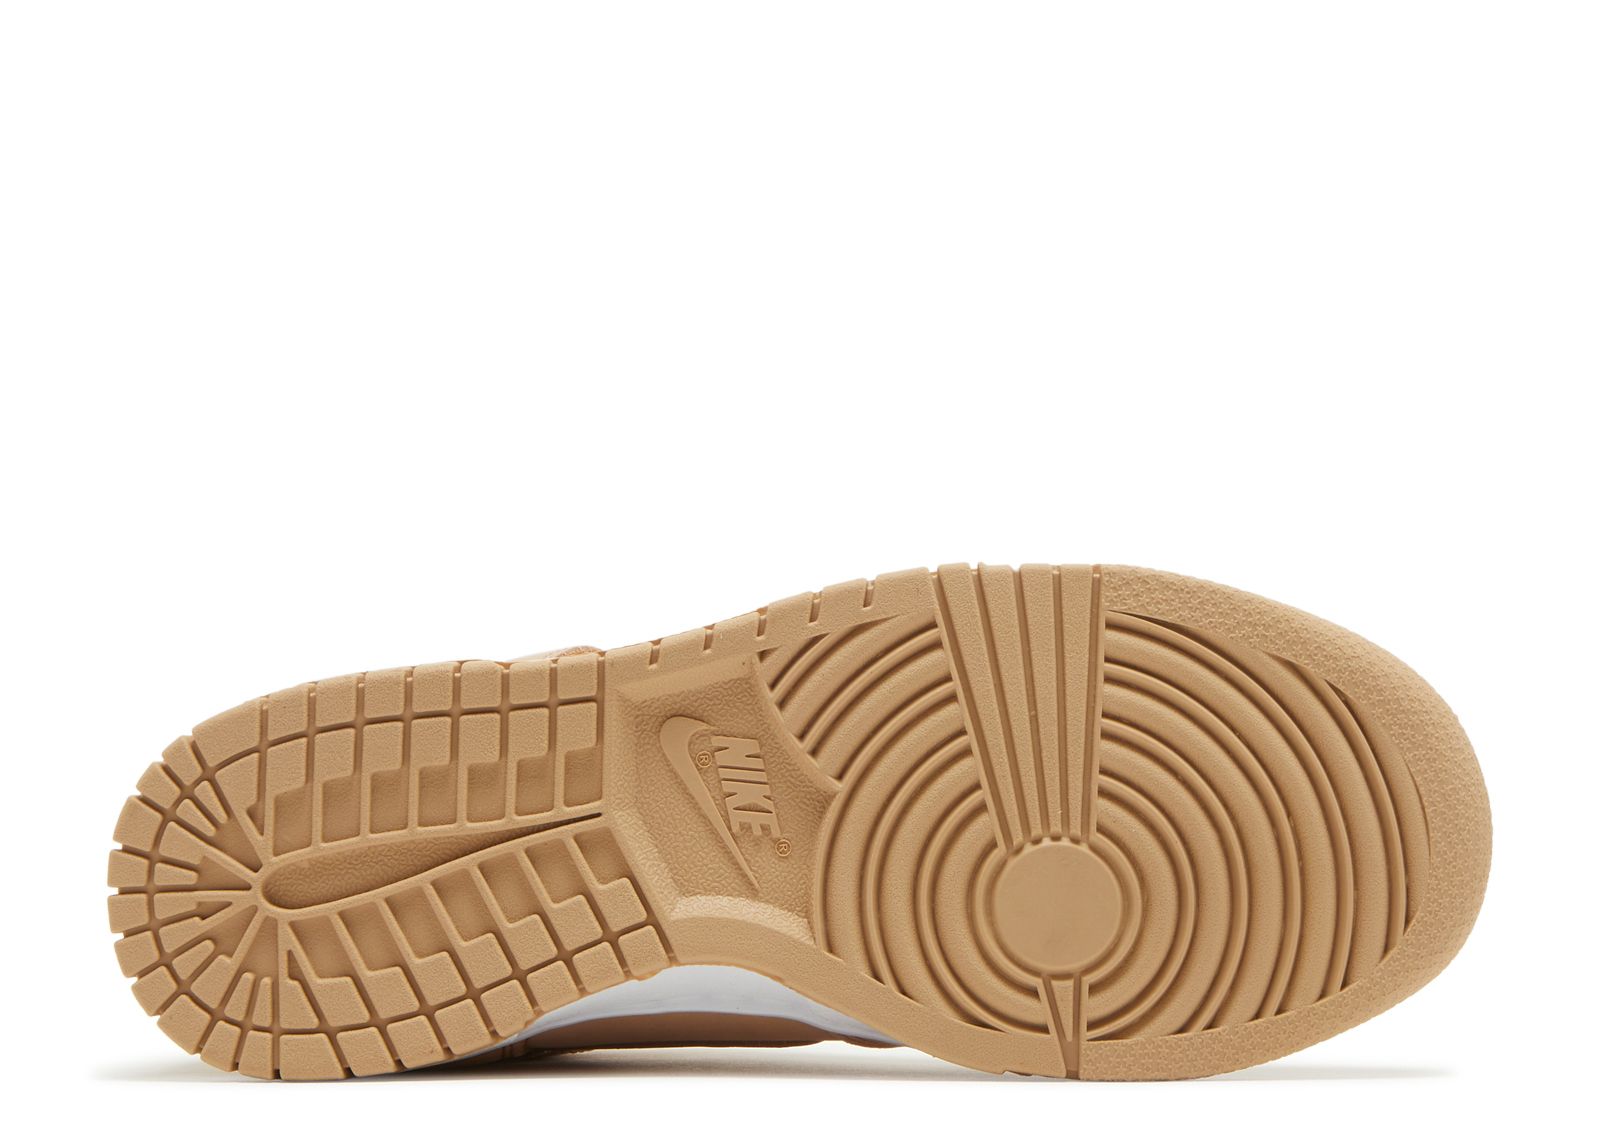 Wmns Dunk High Premium 'Vachetta Tan' - Nike - DX2044 201